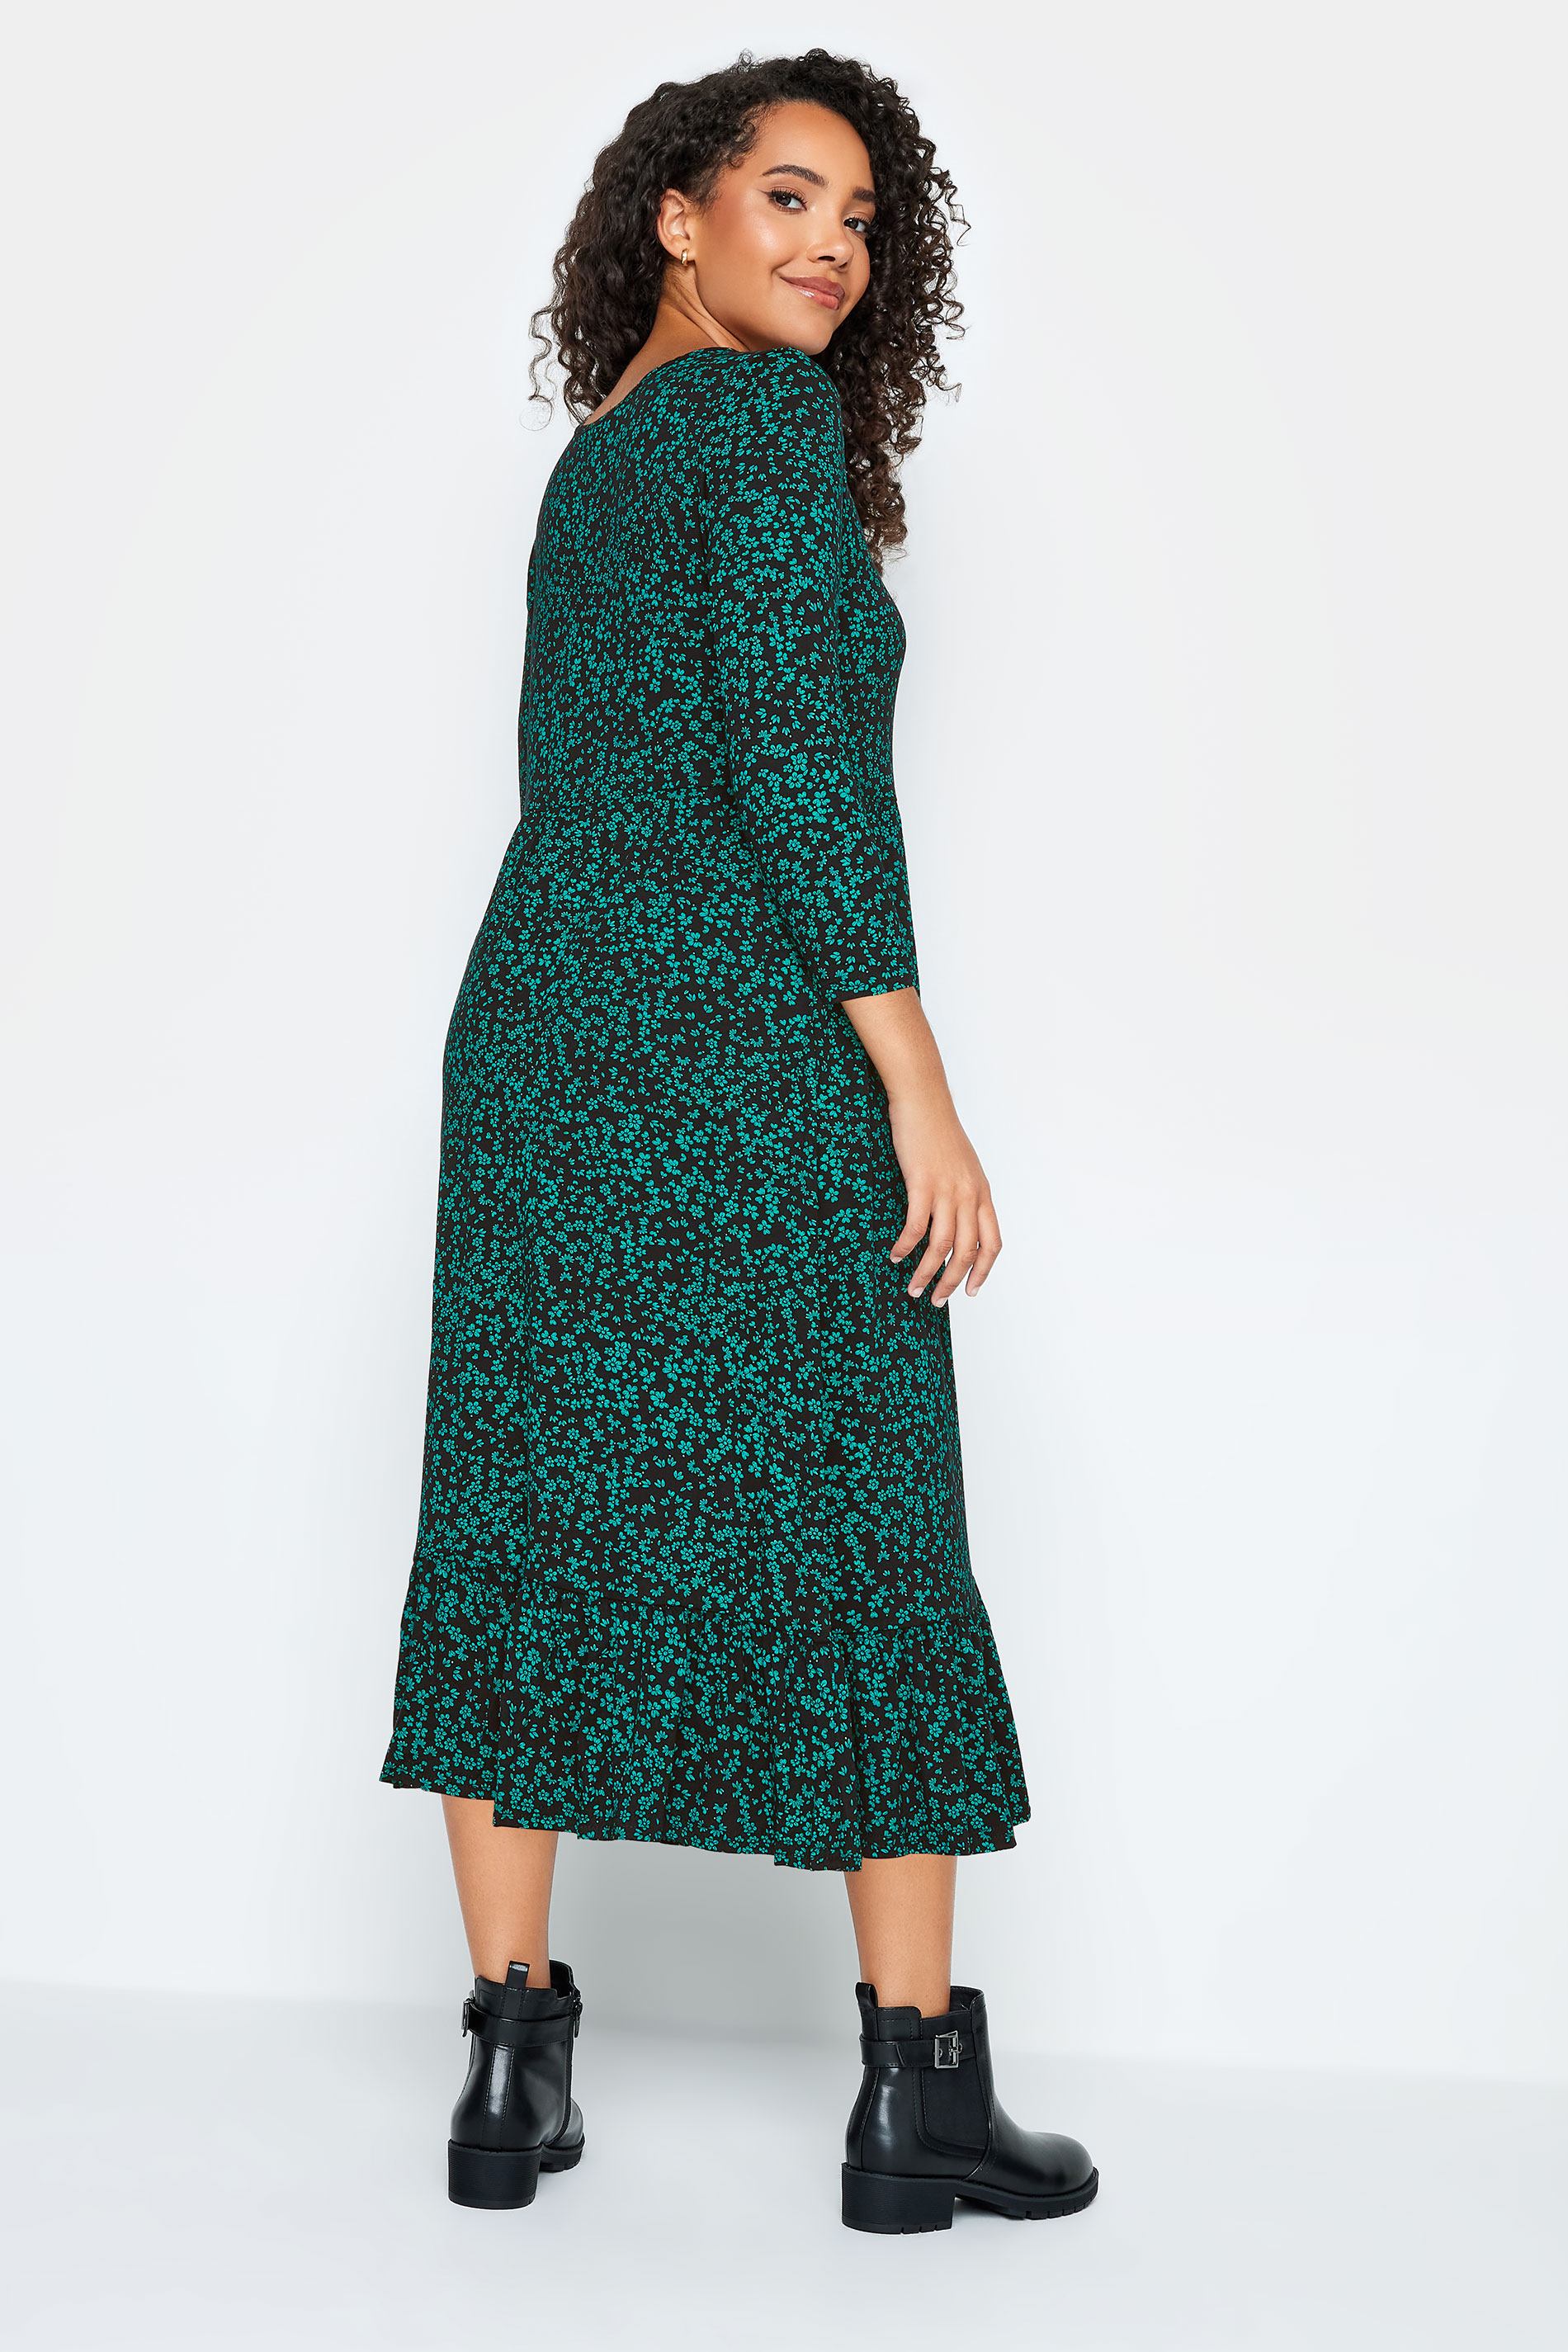 M&Co Petite Dark Green Ditsy Floral Print Midi Dress | M&Co